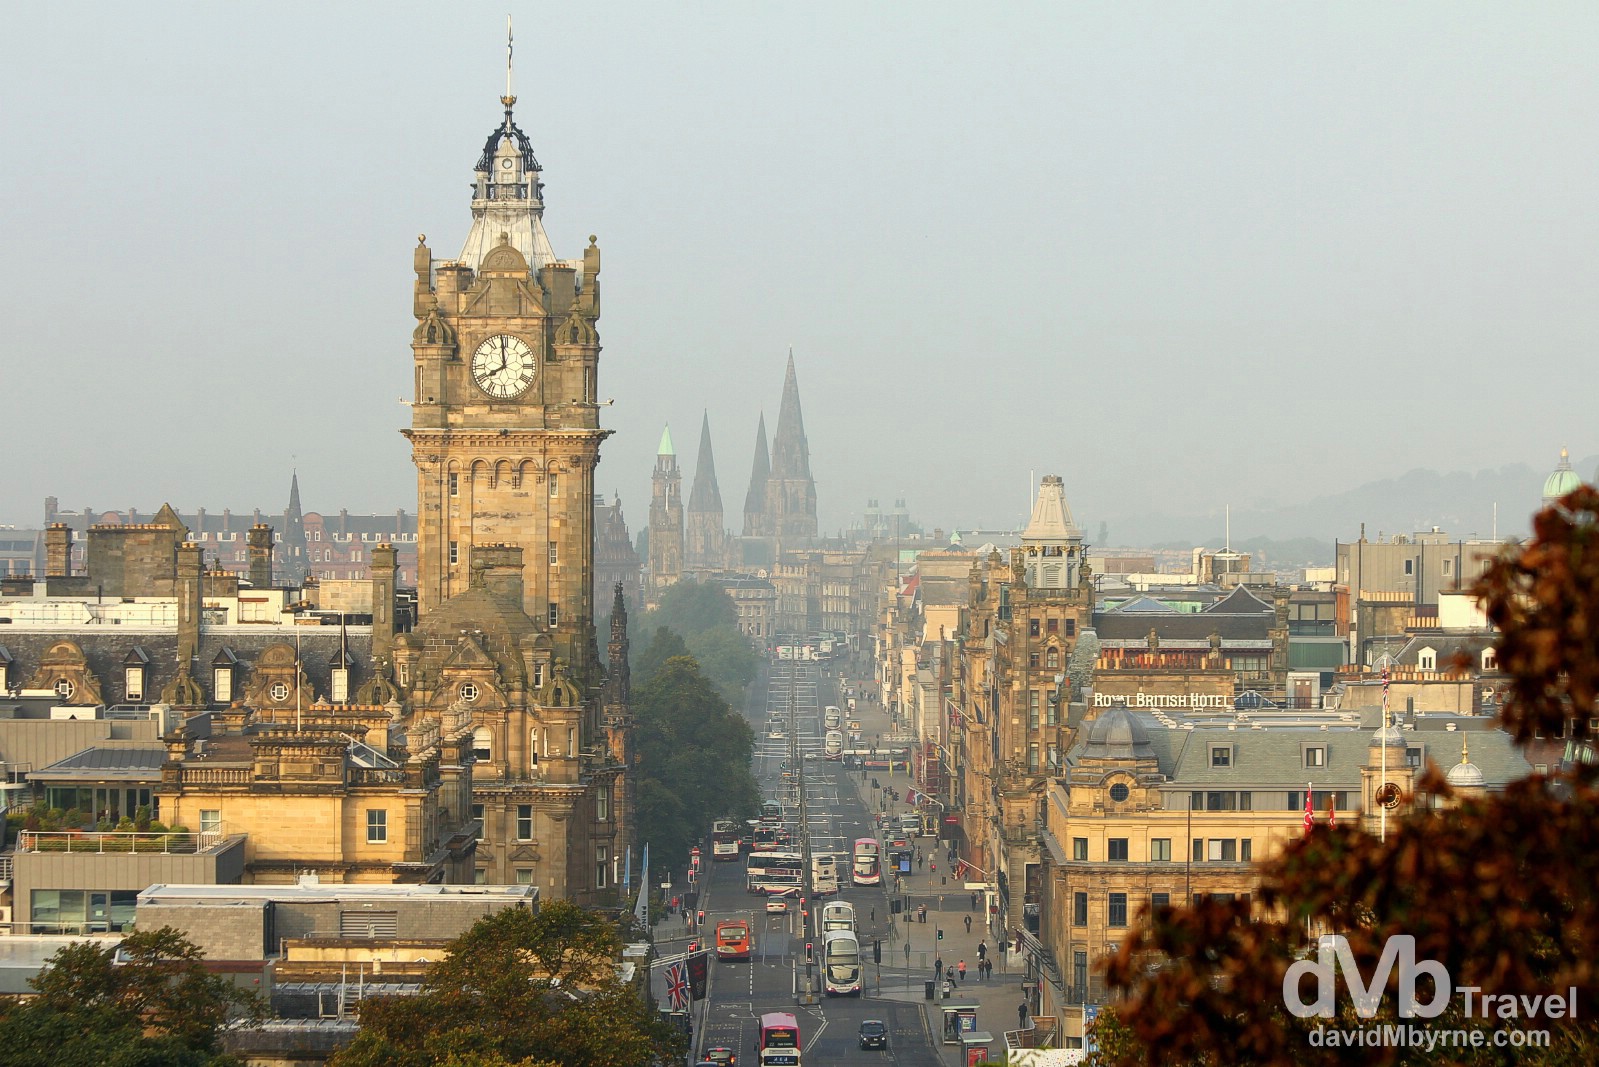 Morning activity on Princess Street as seen from Calton Hill in Edinburgh, Scotland. September 13, 2014.